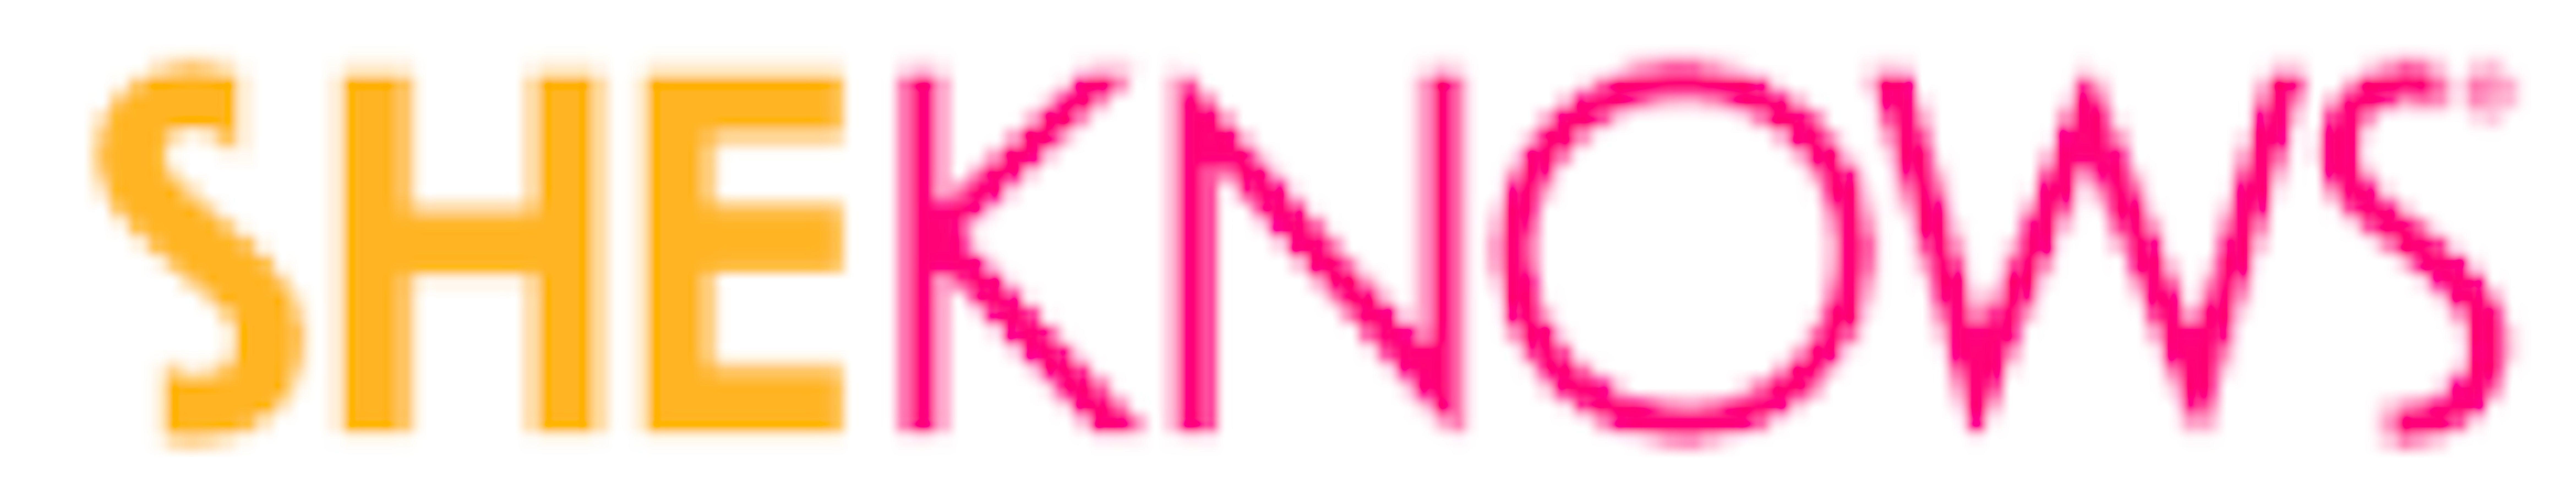 Sheknows.com Logo - Public Relations - Kel & Partners